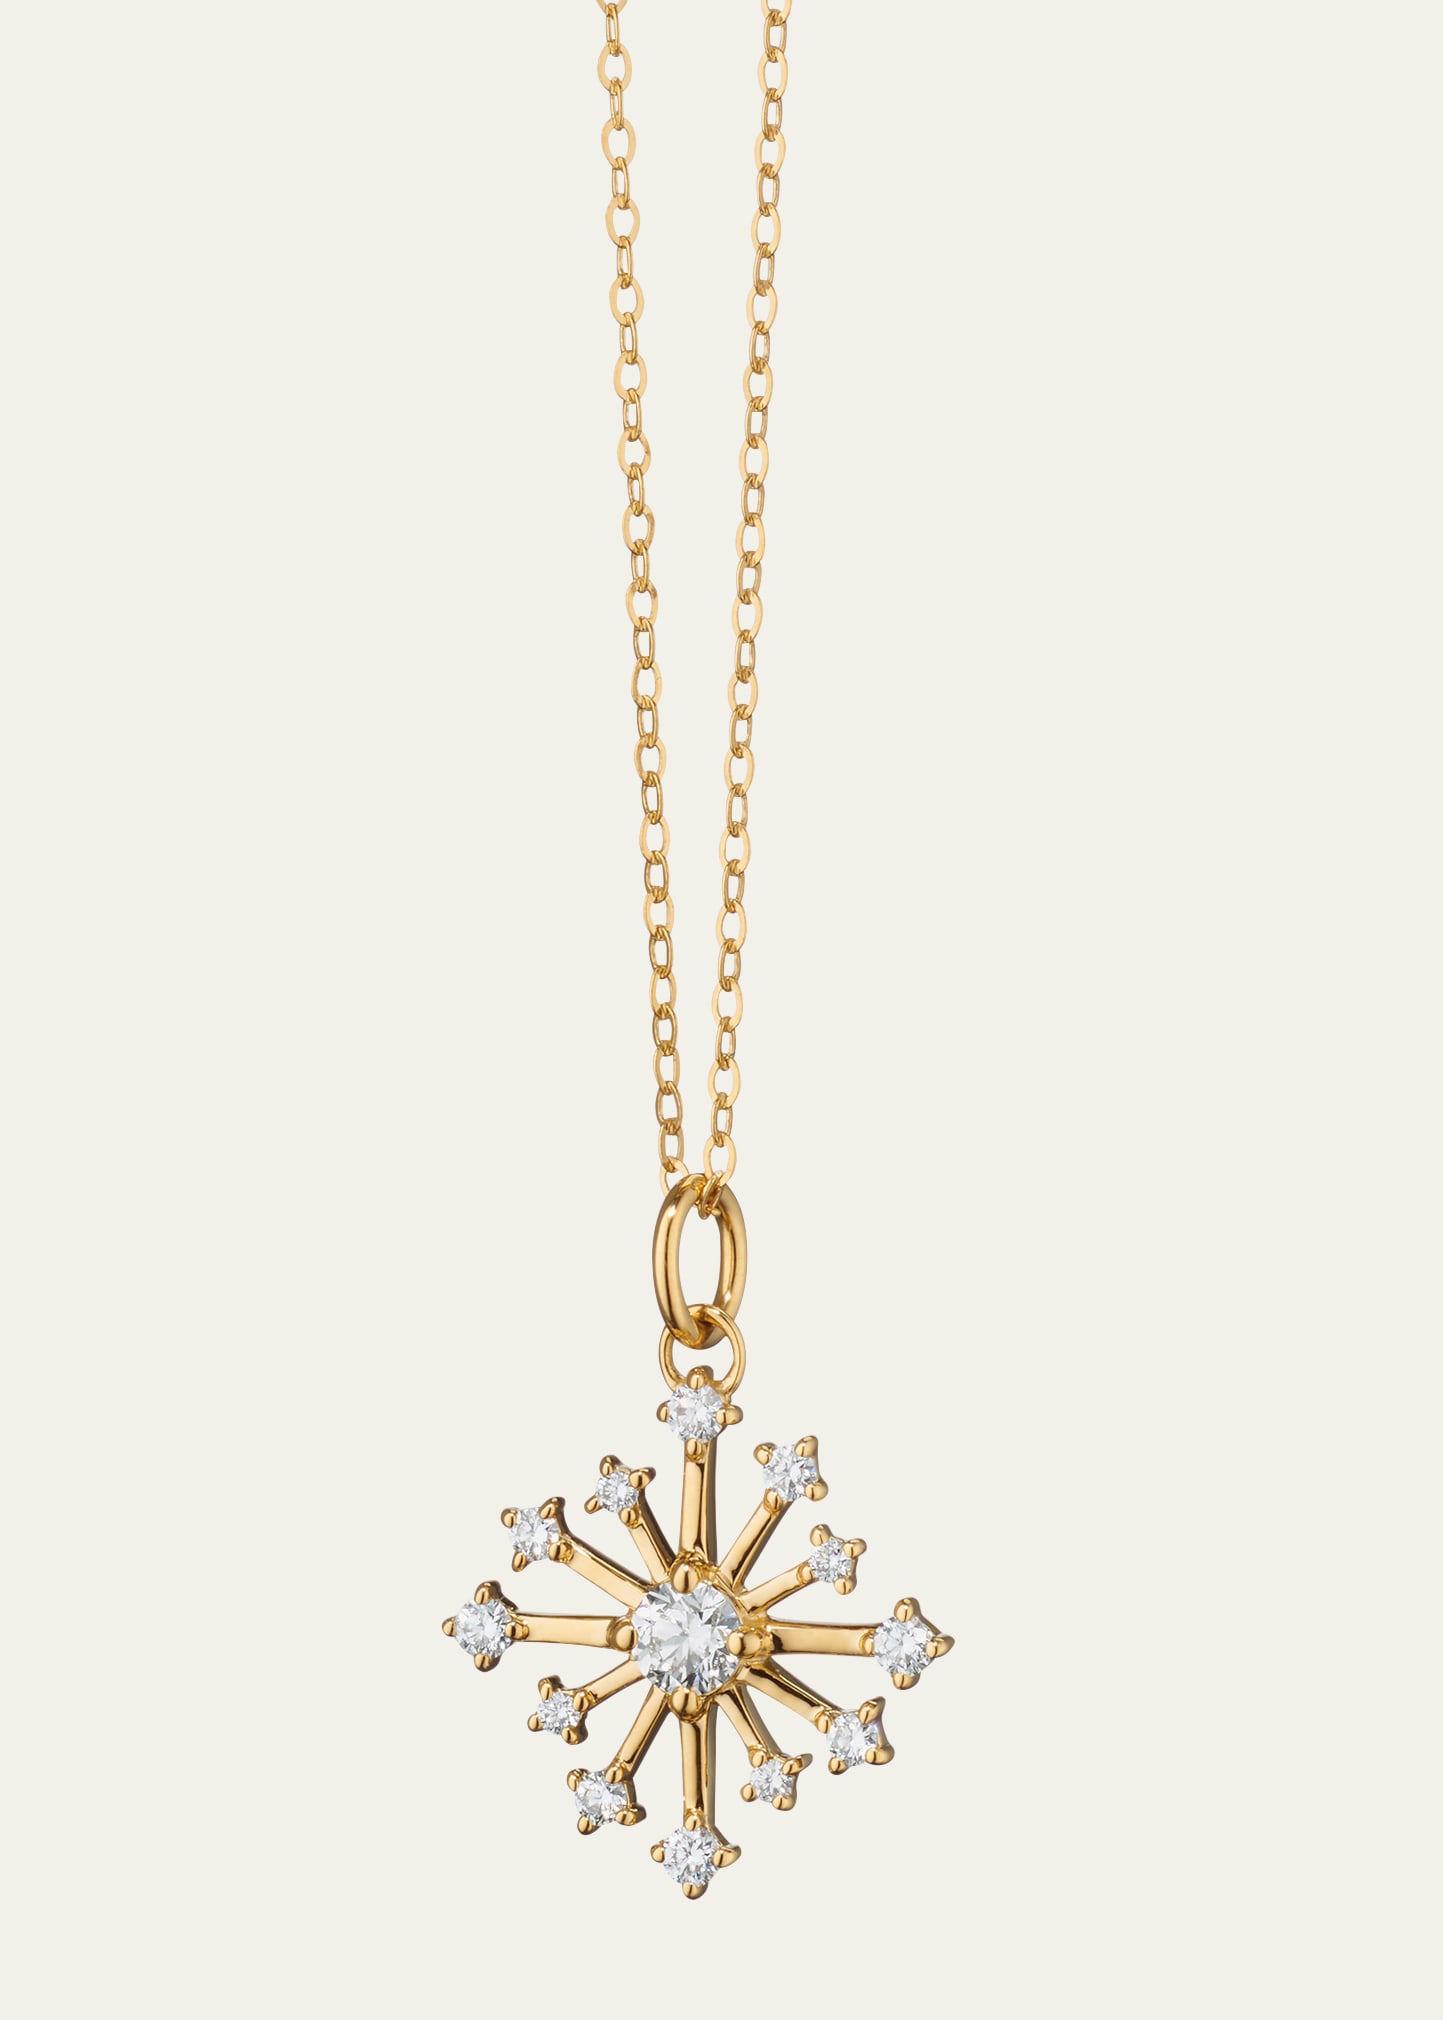 18-Karat Yellow Gold Star Charm Necklace, 17"